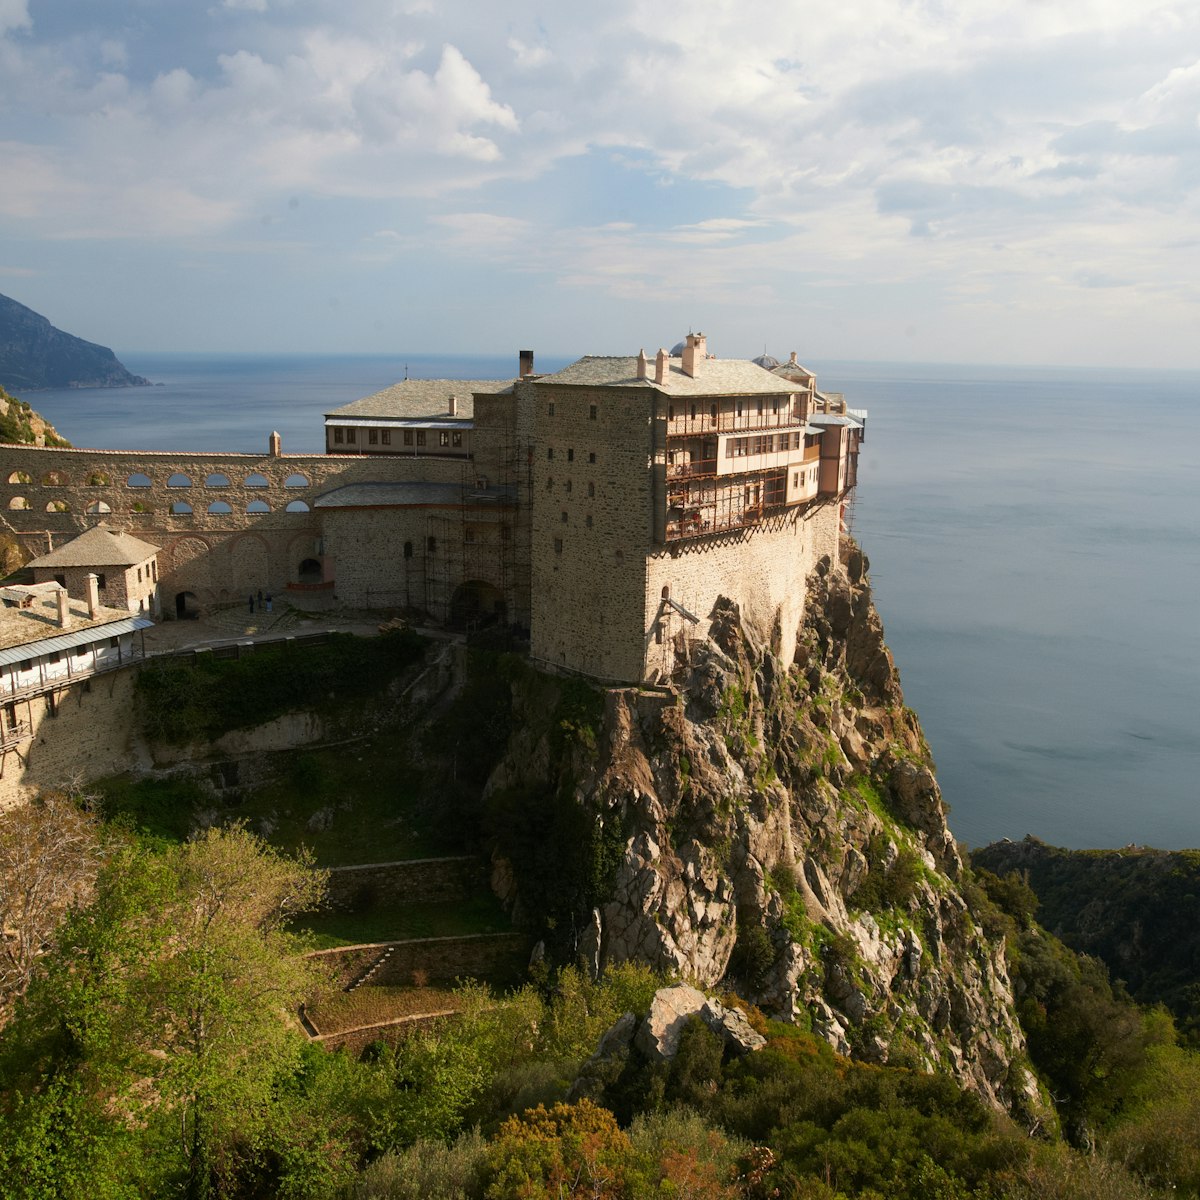 Simonos Petras Monastery, Mount Athos, Greece.